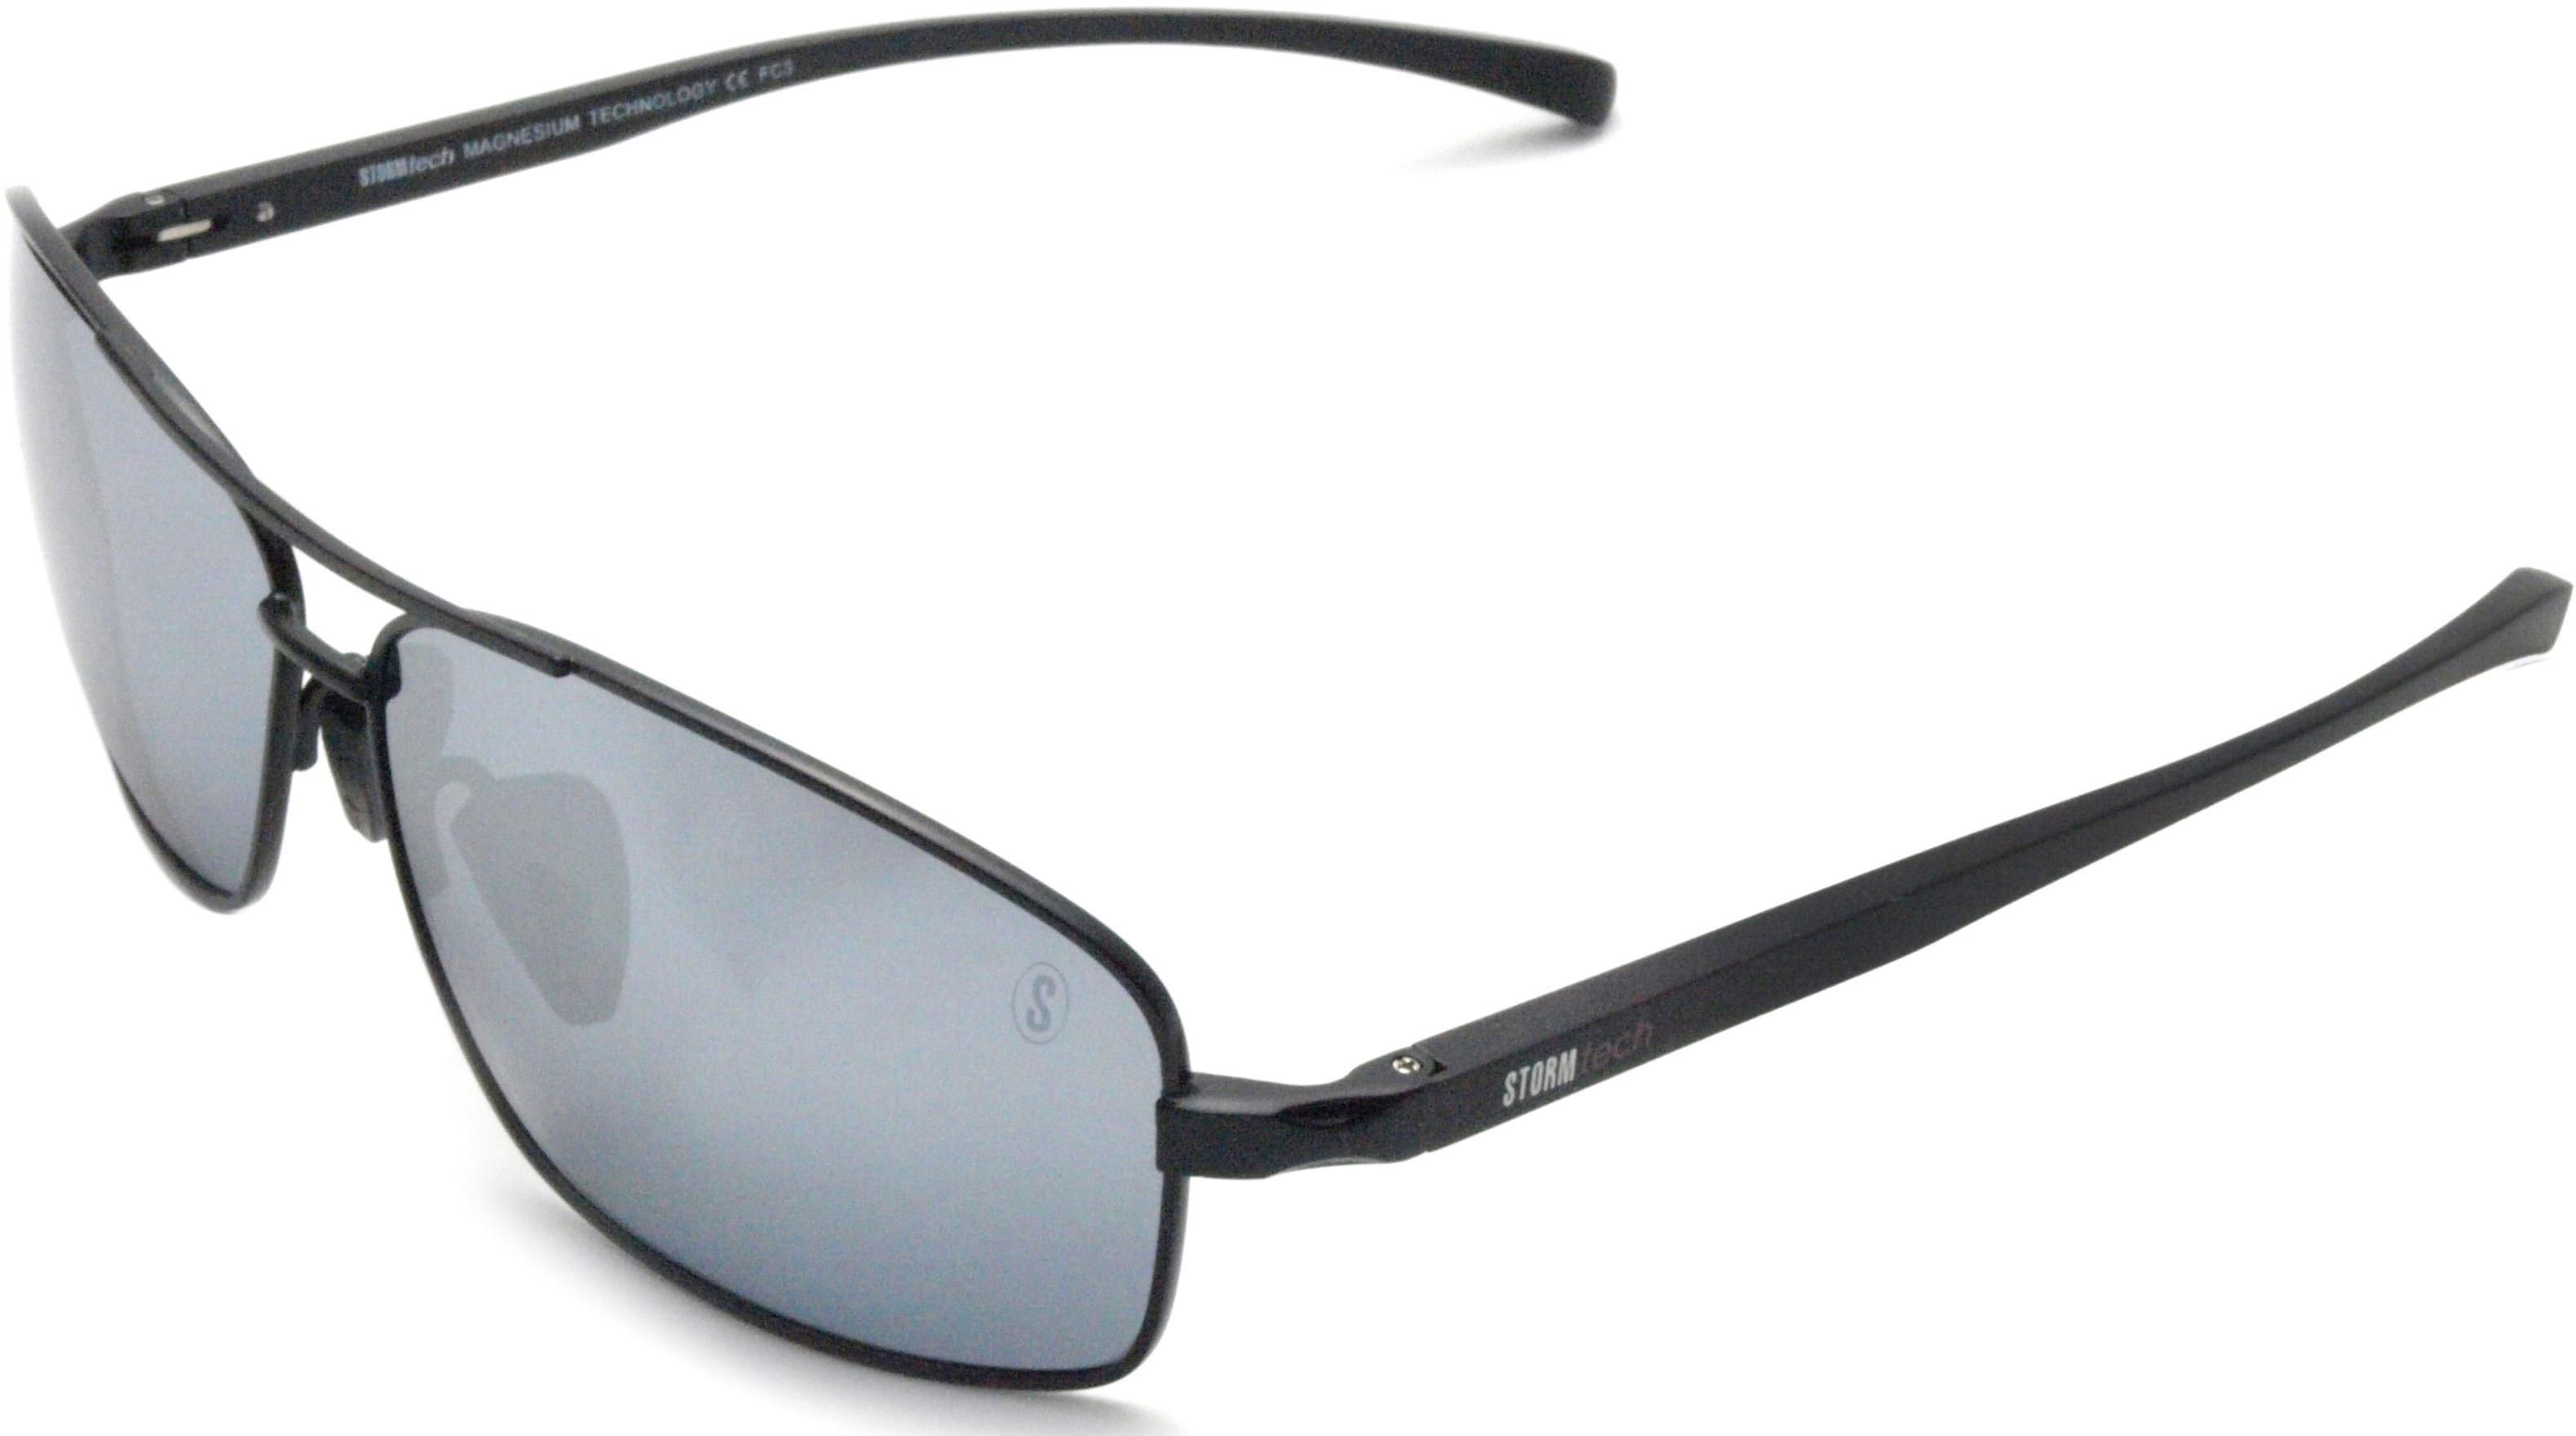 Stormtech Solymus Sunglasses - Grey